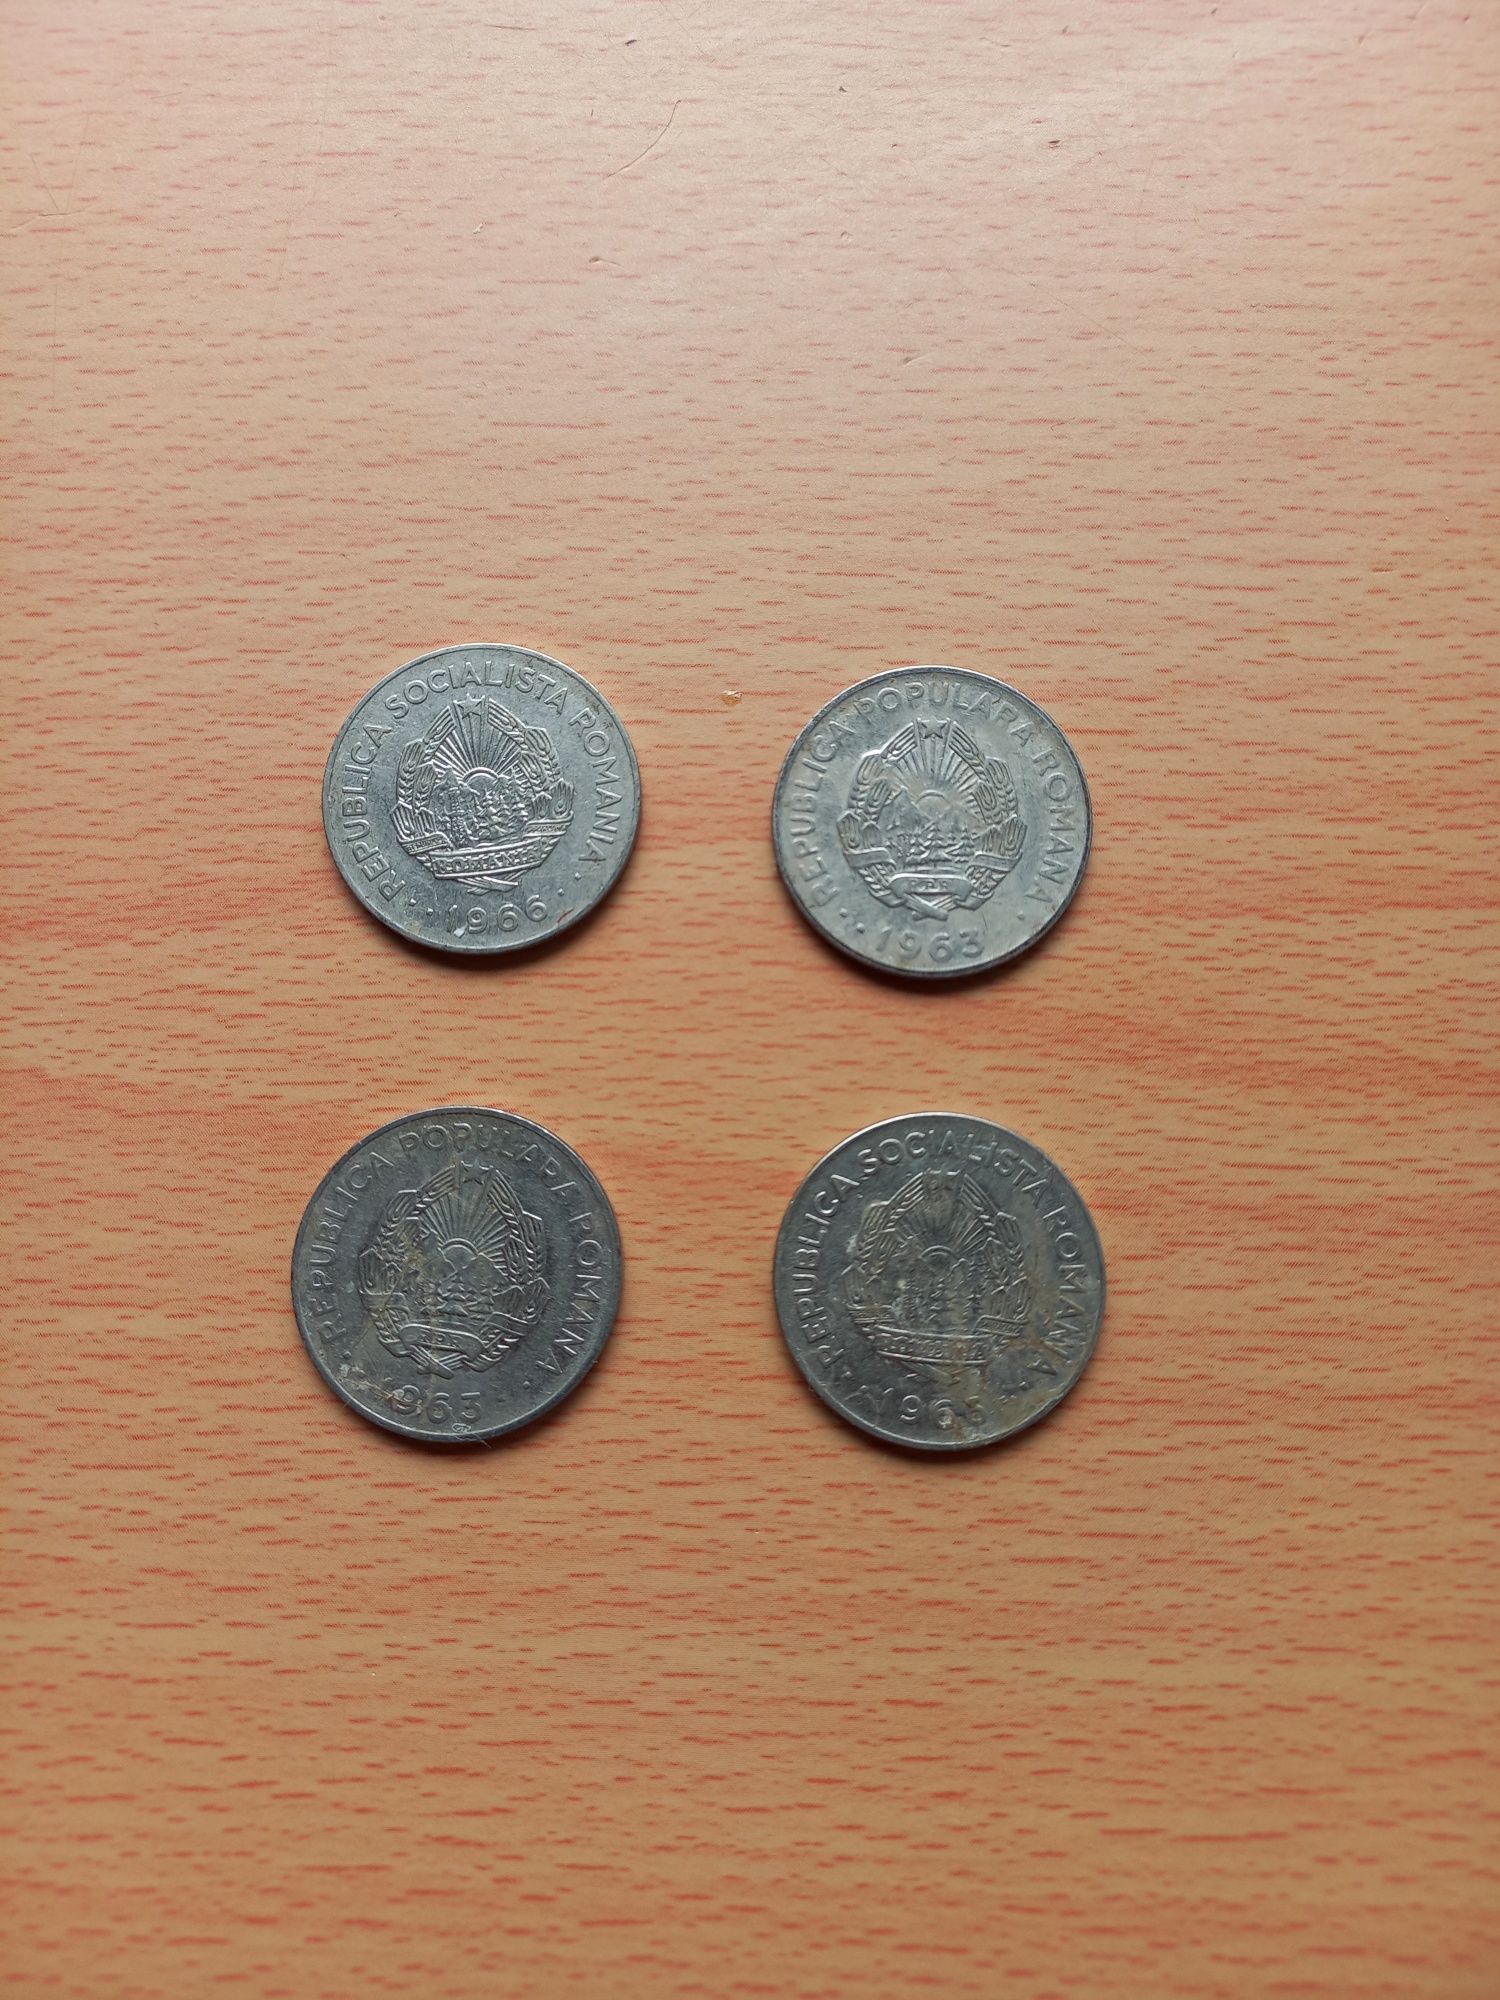 Monede 1 leu din 1963 si 1966